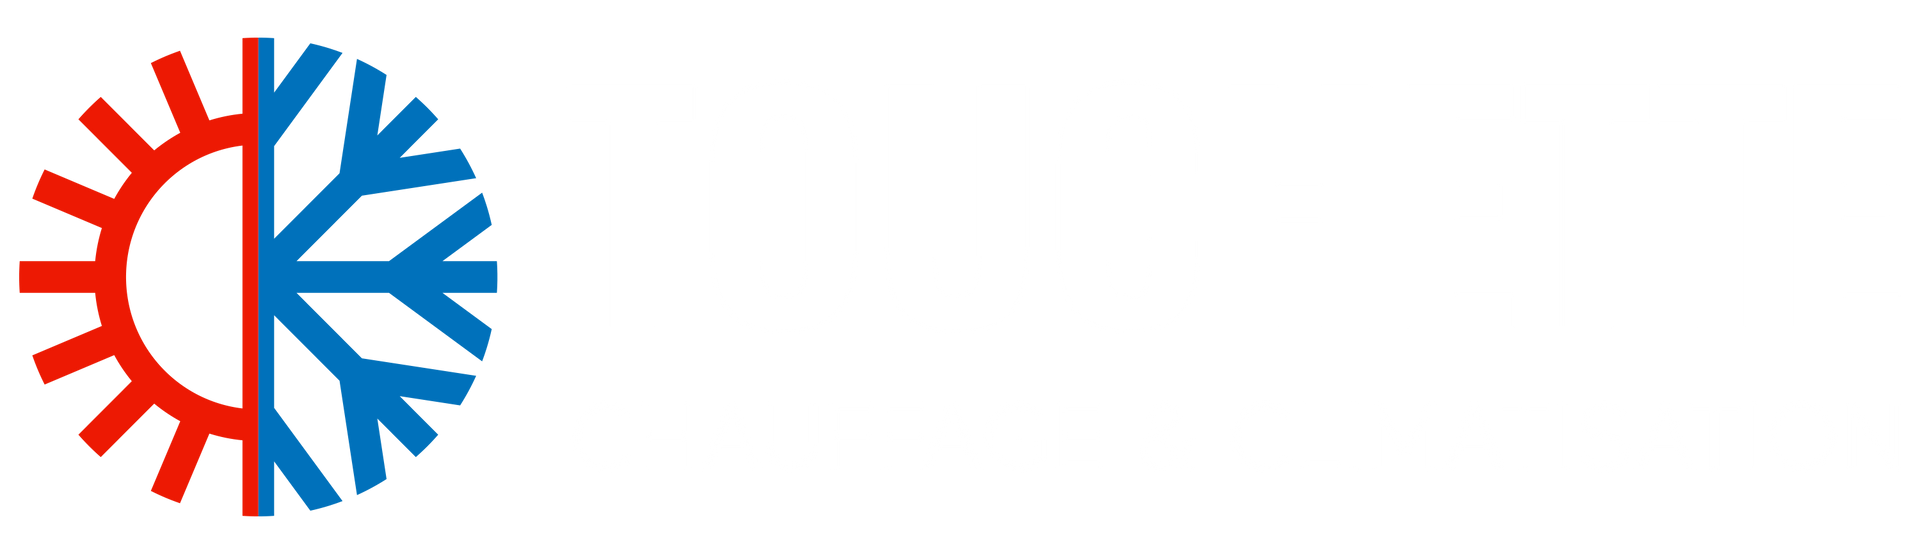 Touchette Chauffage et Climatisation LOGO